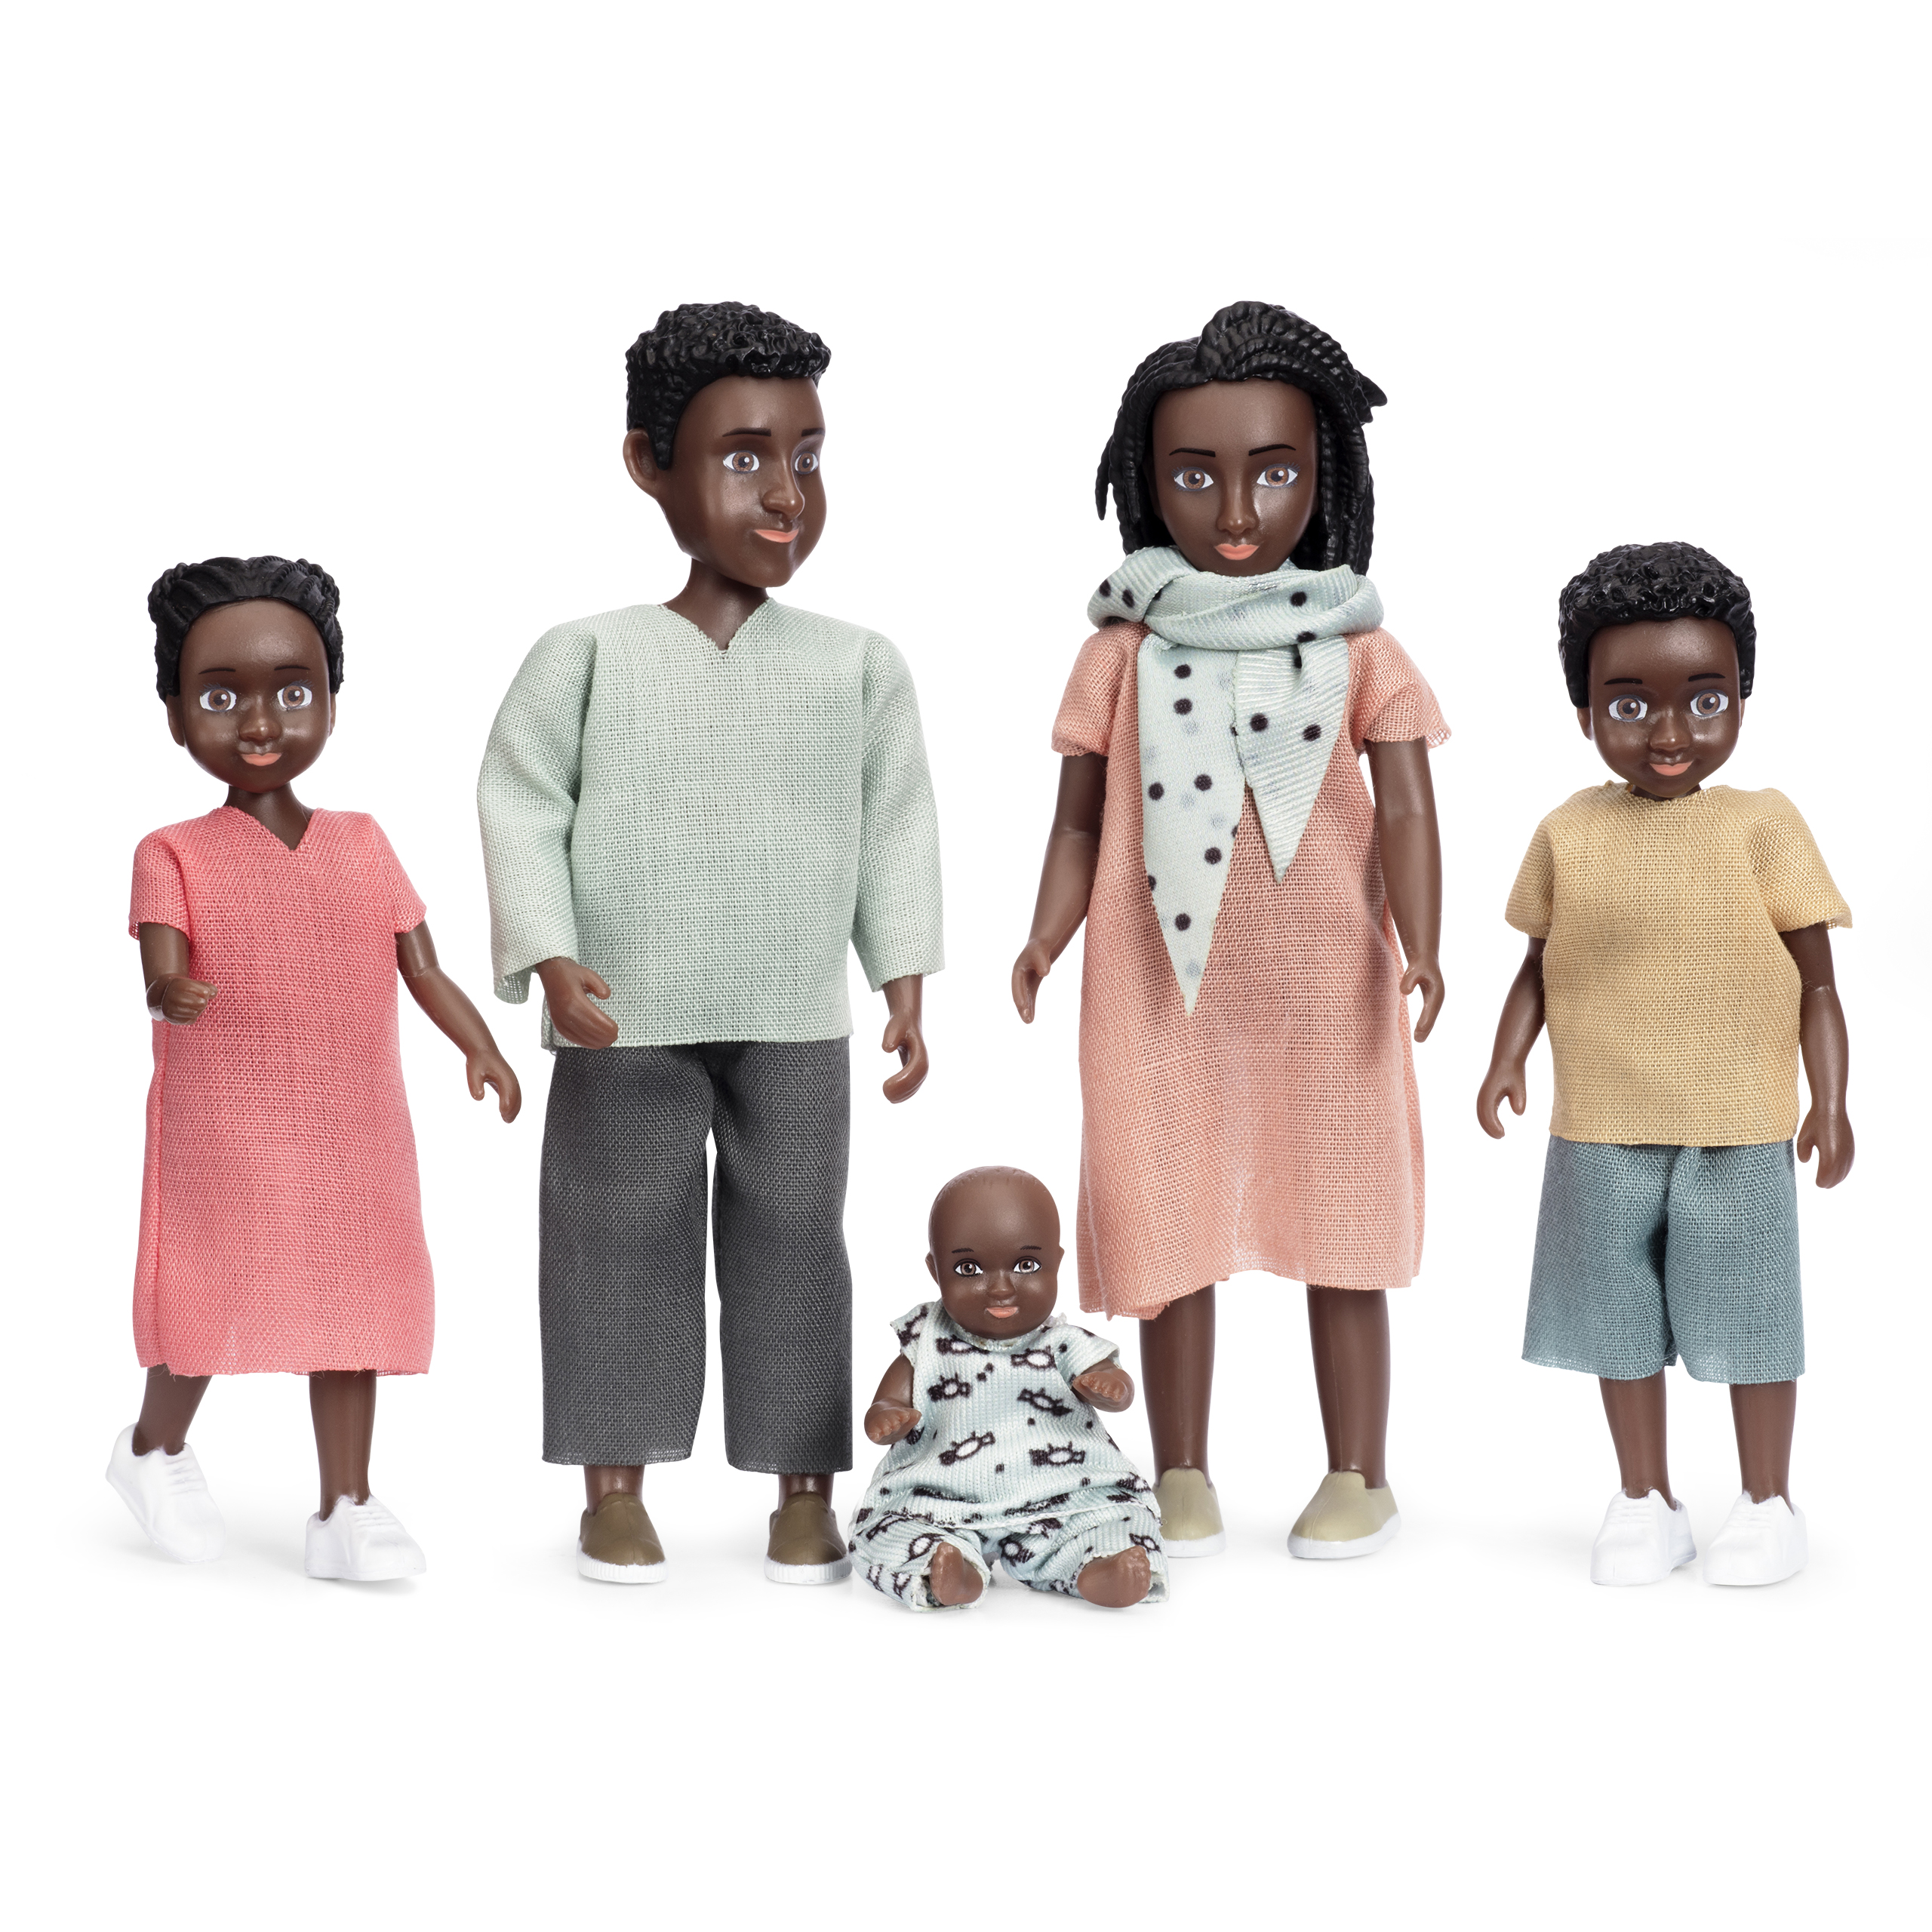 Dark-skinned dolls lundby	doll house dolls set billie